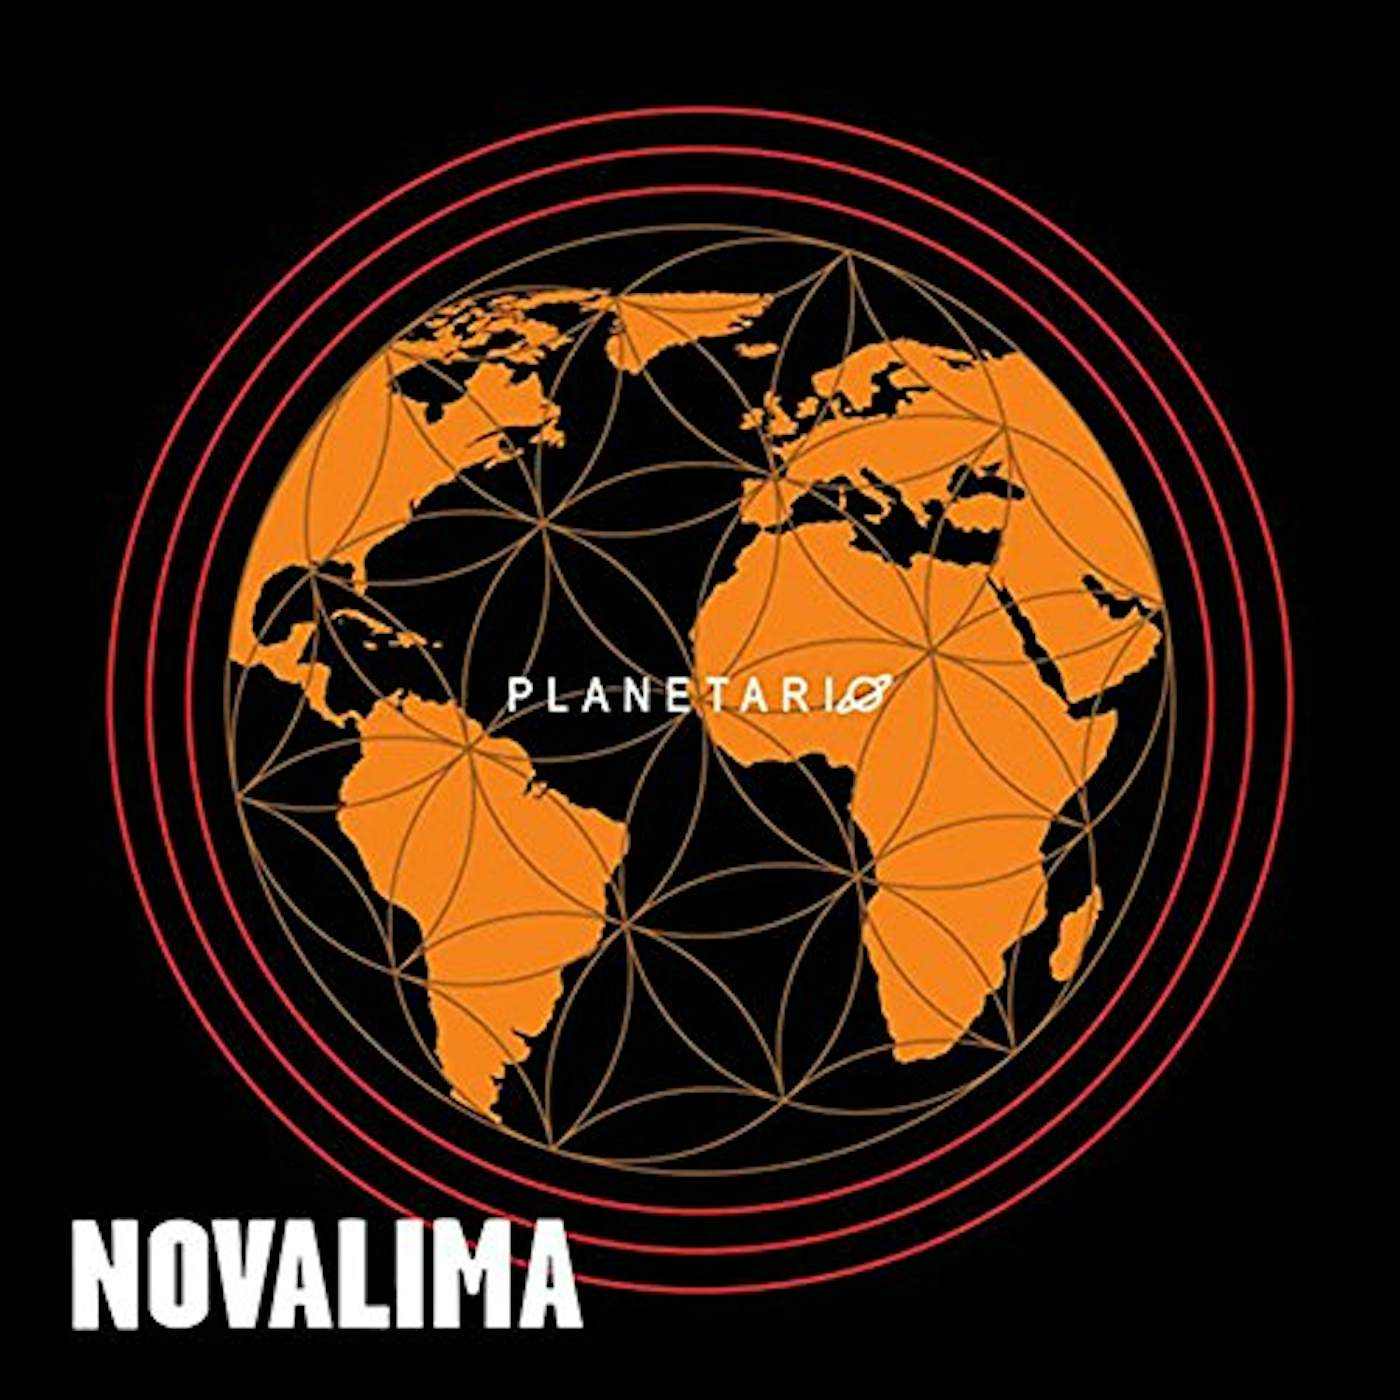 Novalima PLANETARIO CD